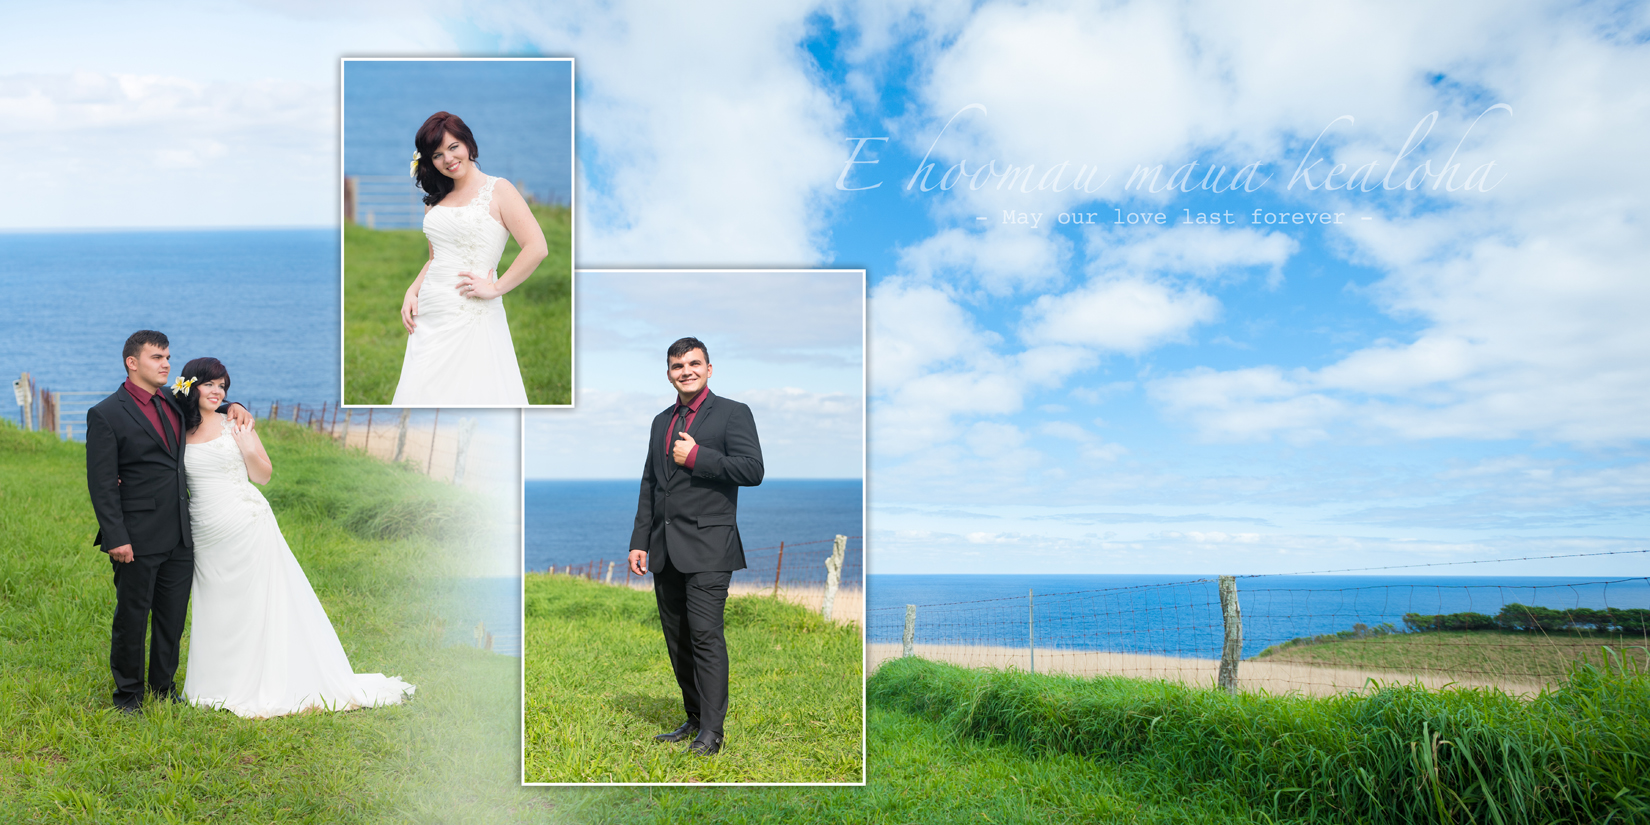 Sample Album Design of Maui Wedding Photography at Panoramic Tropical Setting in Haiku